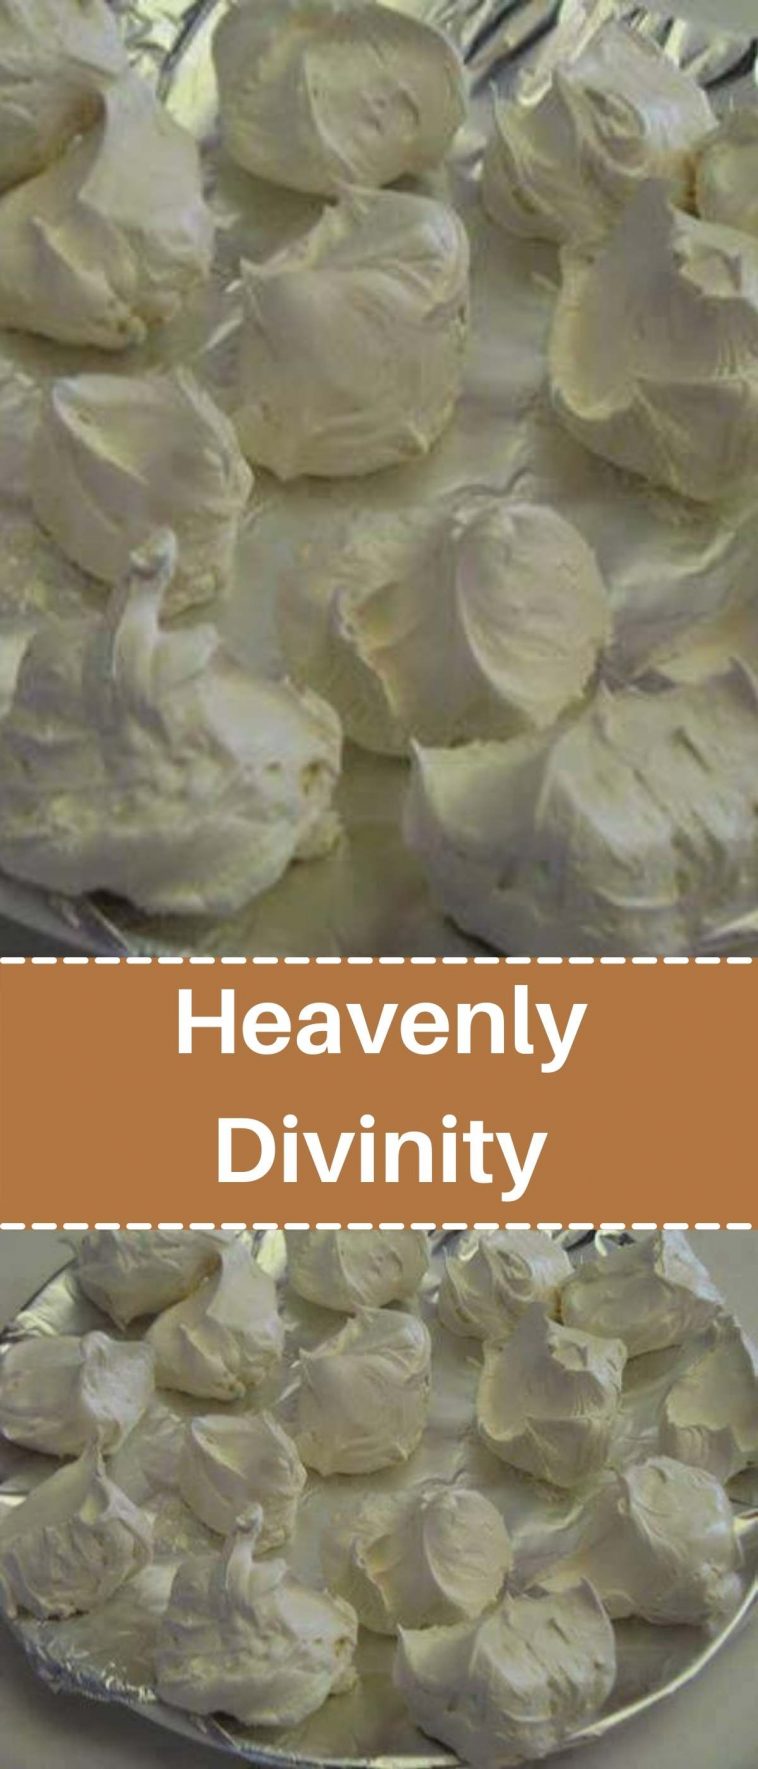 Heavenly Divinity